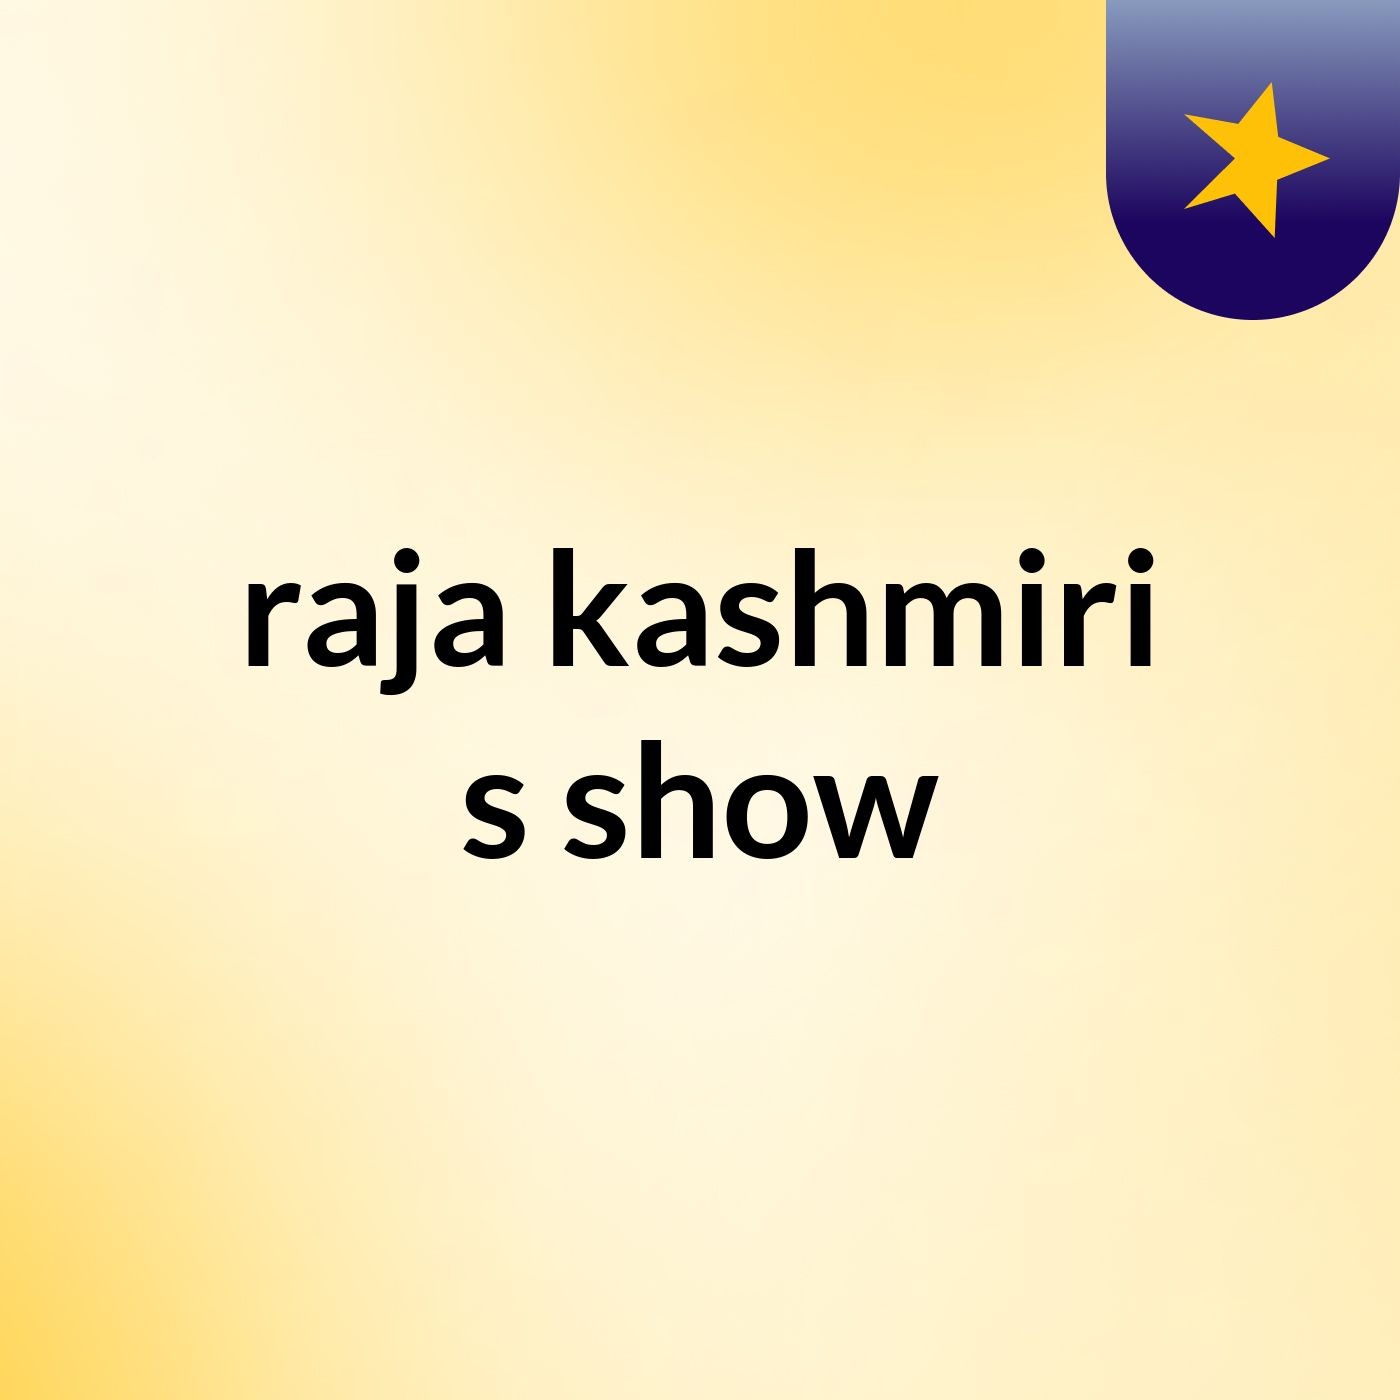 raja kashmiri's show